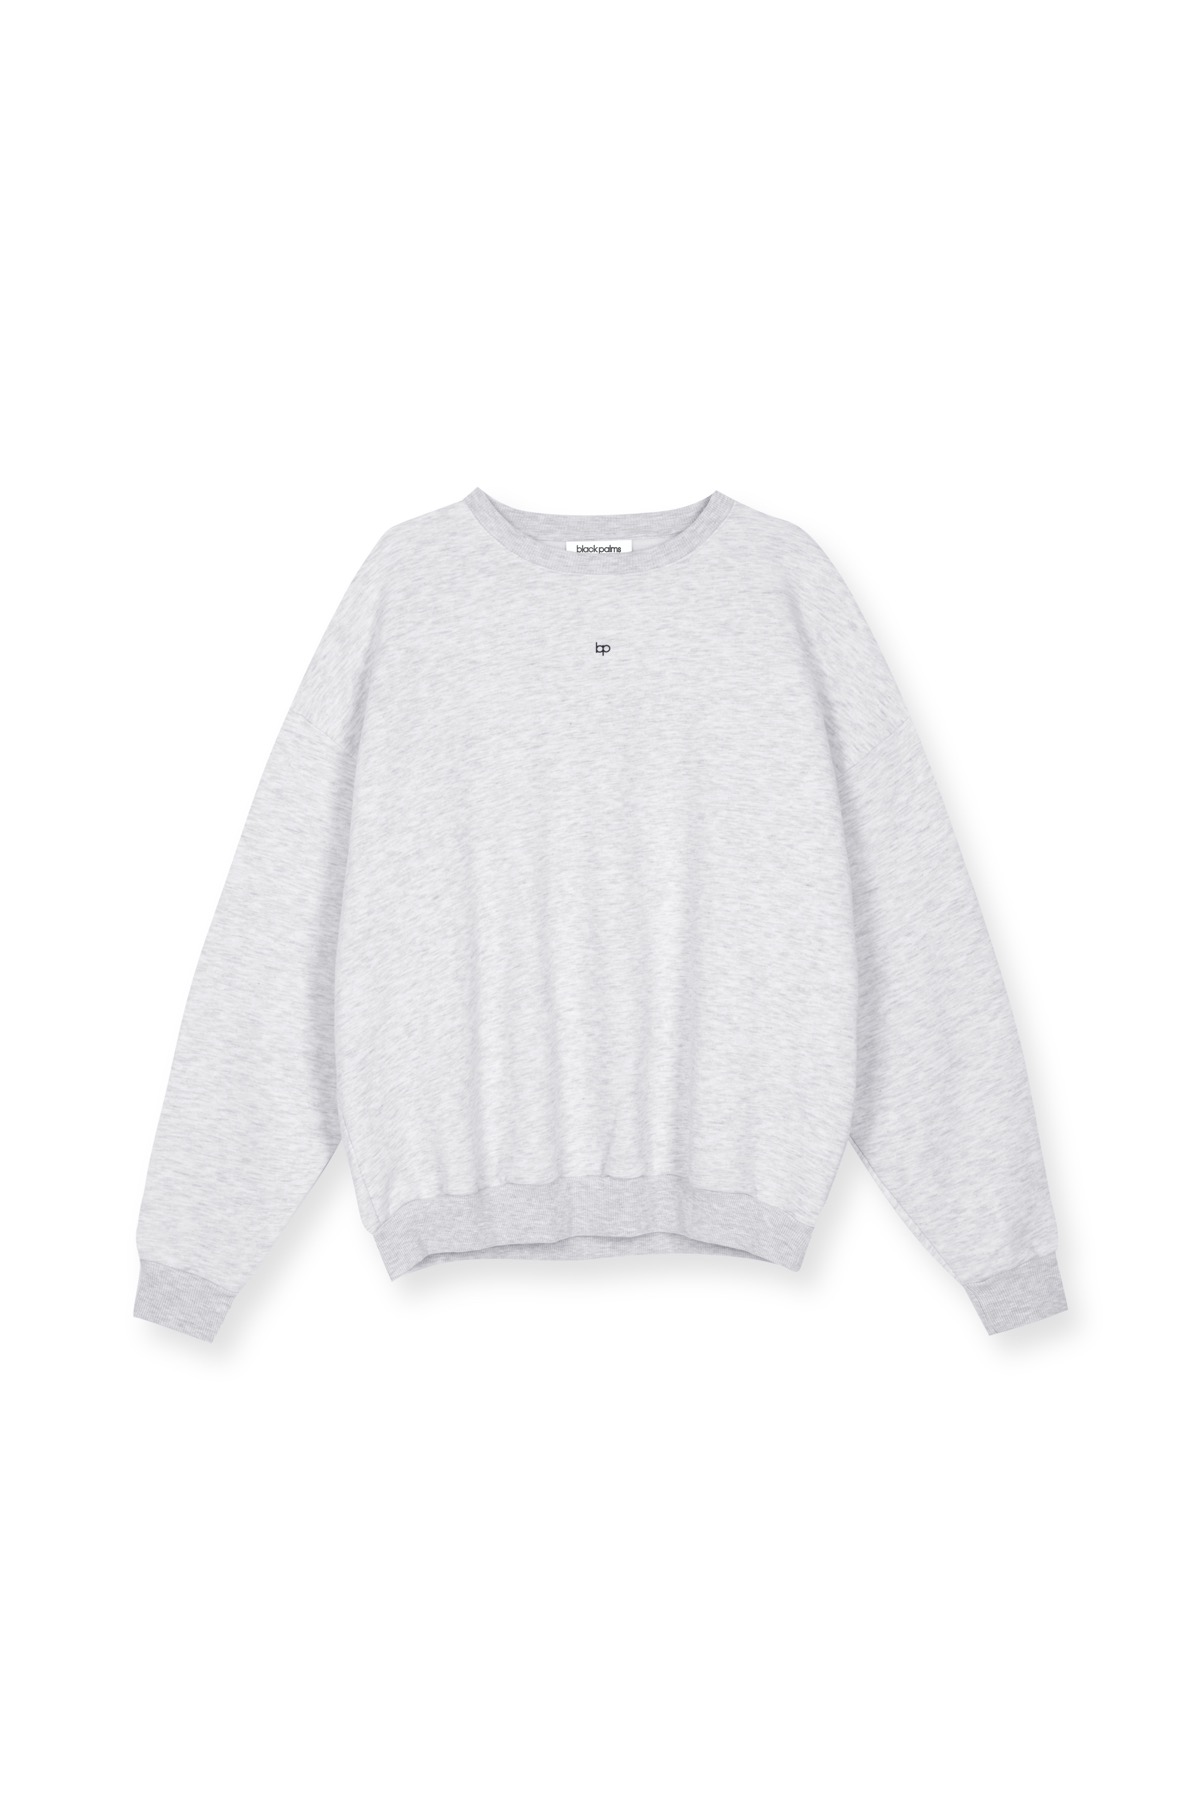 HONEY Sweater Light Grey